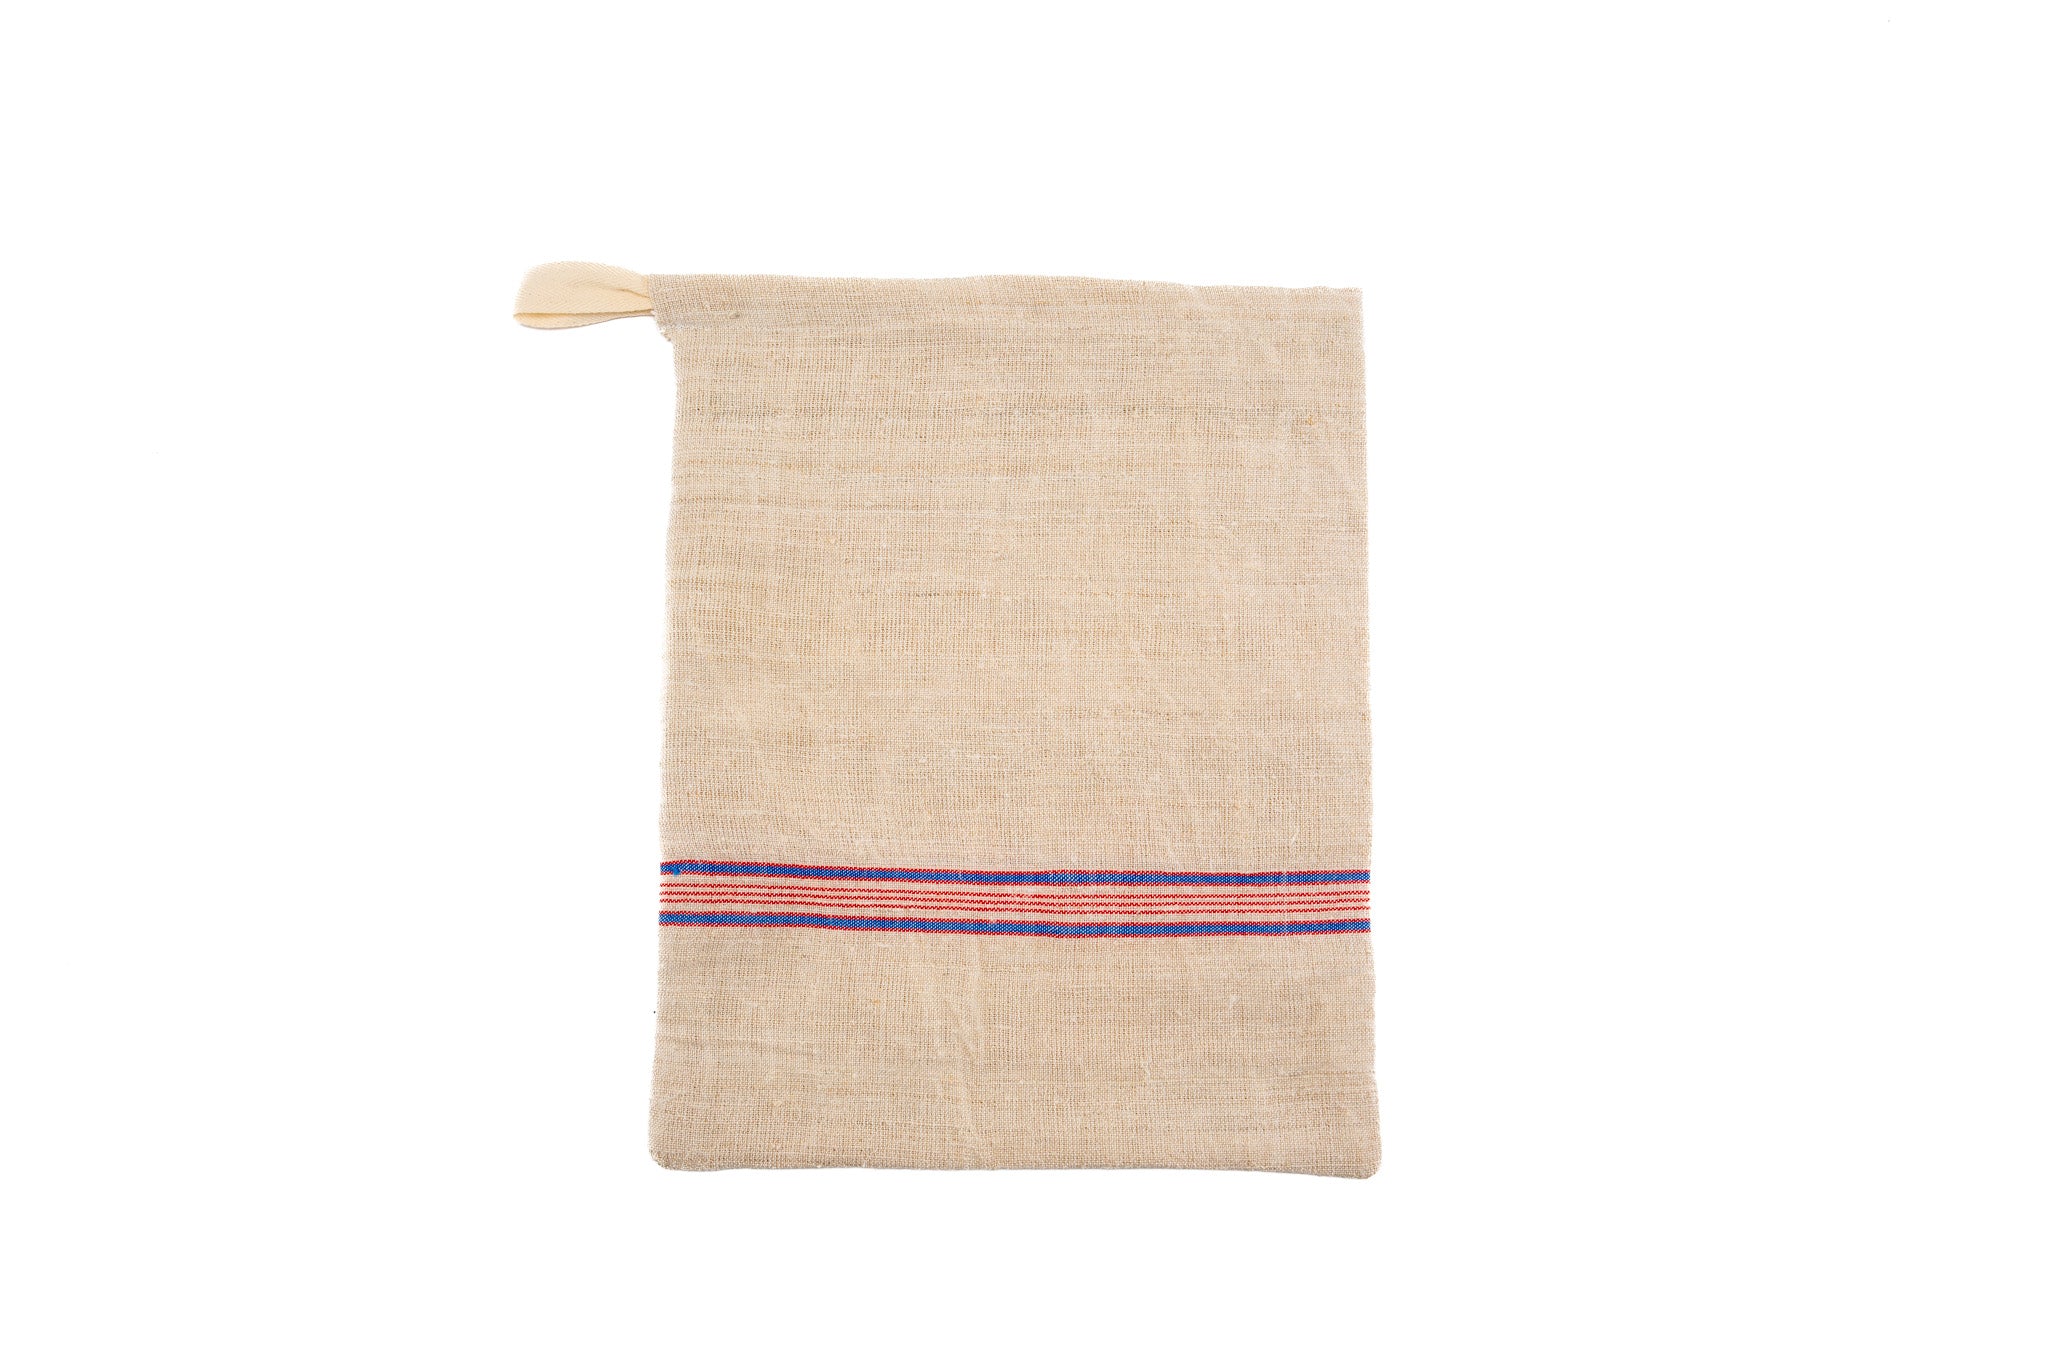 Bag: Handwoven antique and vintage hemp bread bags- BG226